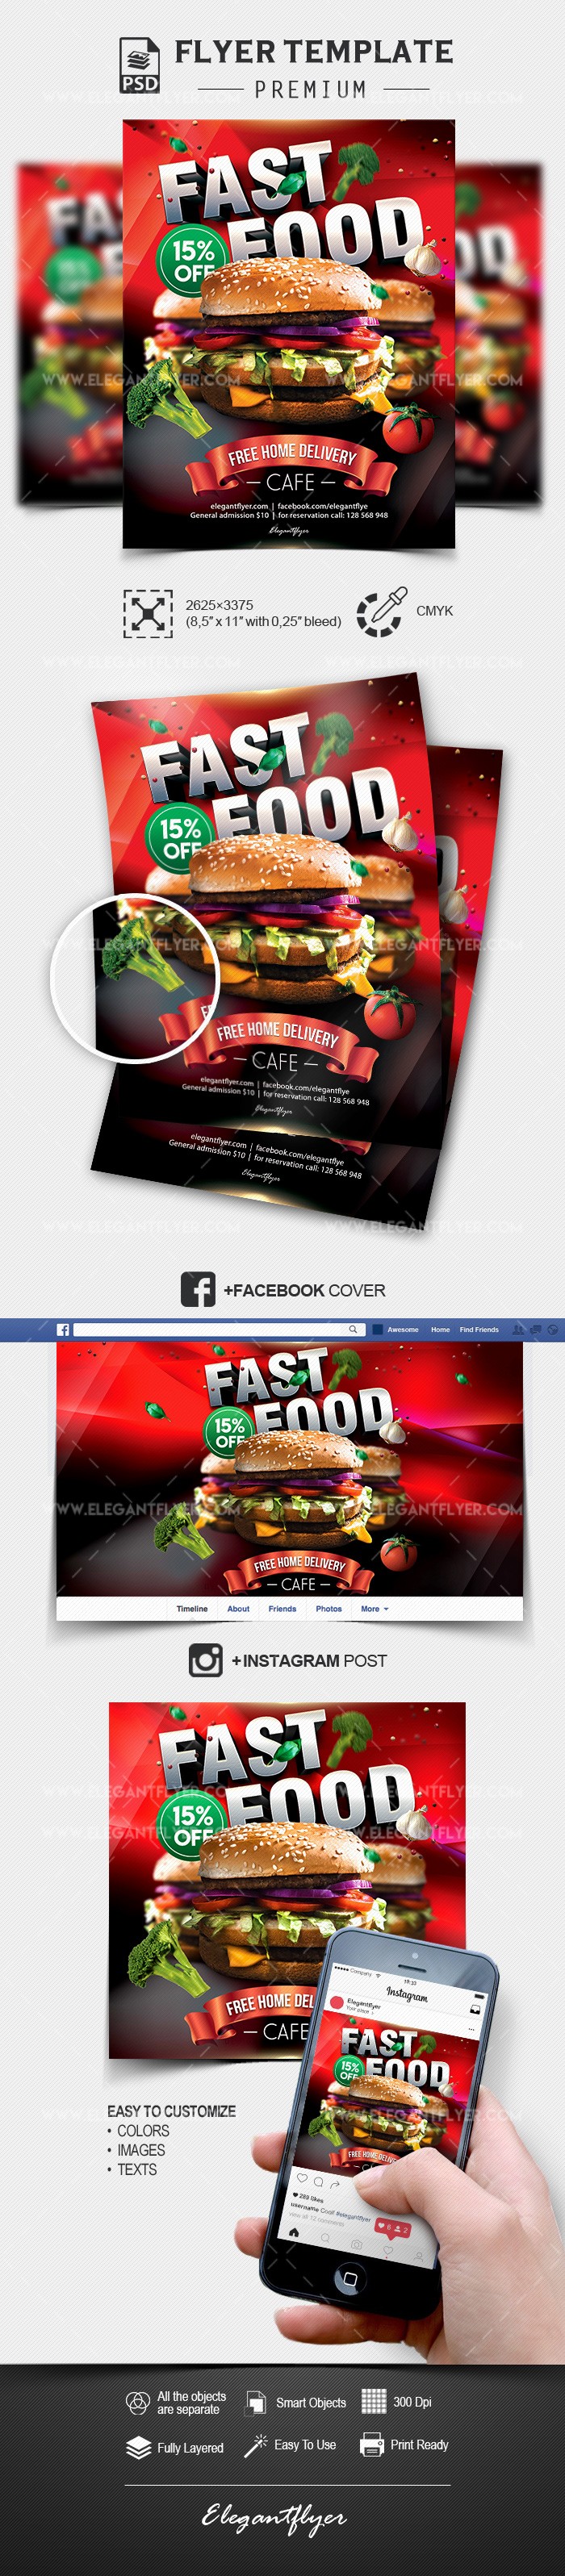 Fast Food Café by ElegantFlyer